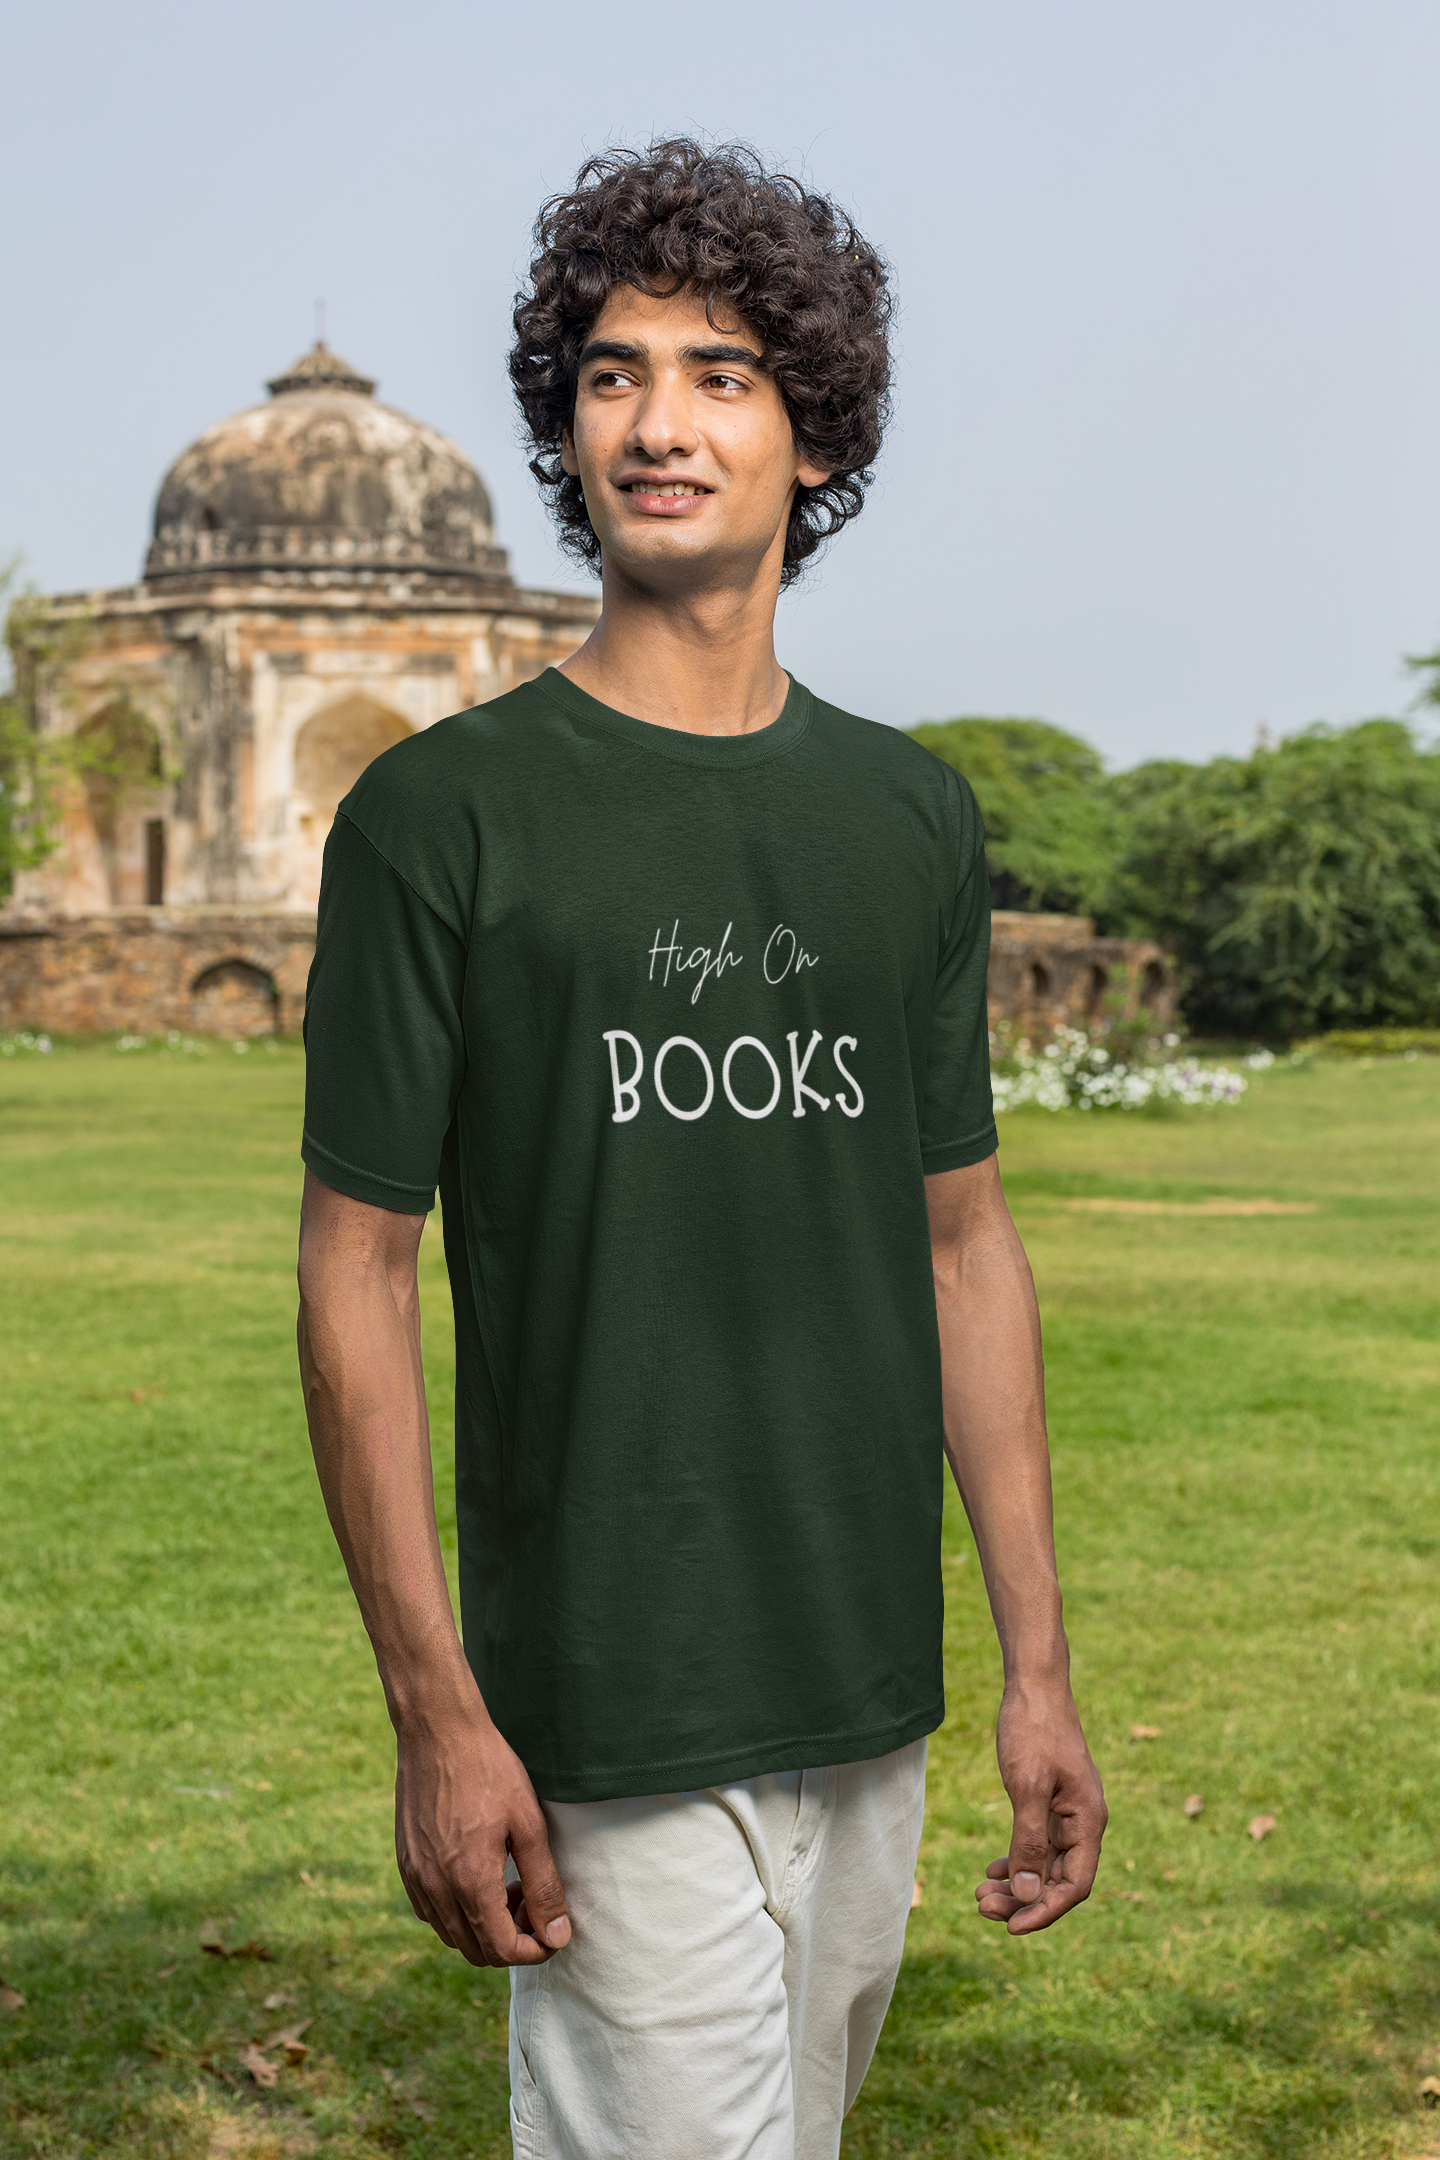 The Bookoholics Annual Trip T-shirt (Edition 5)